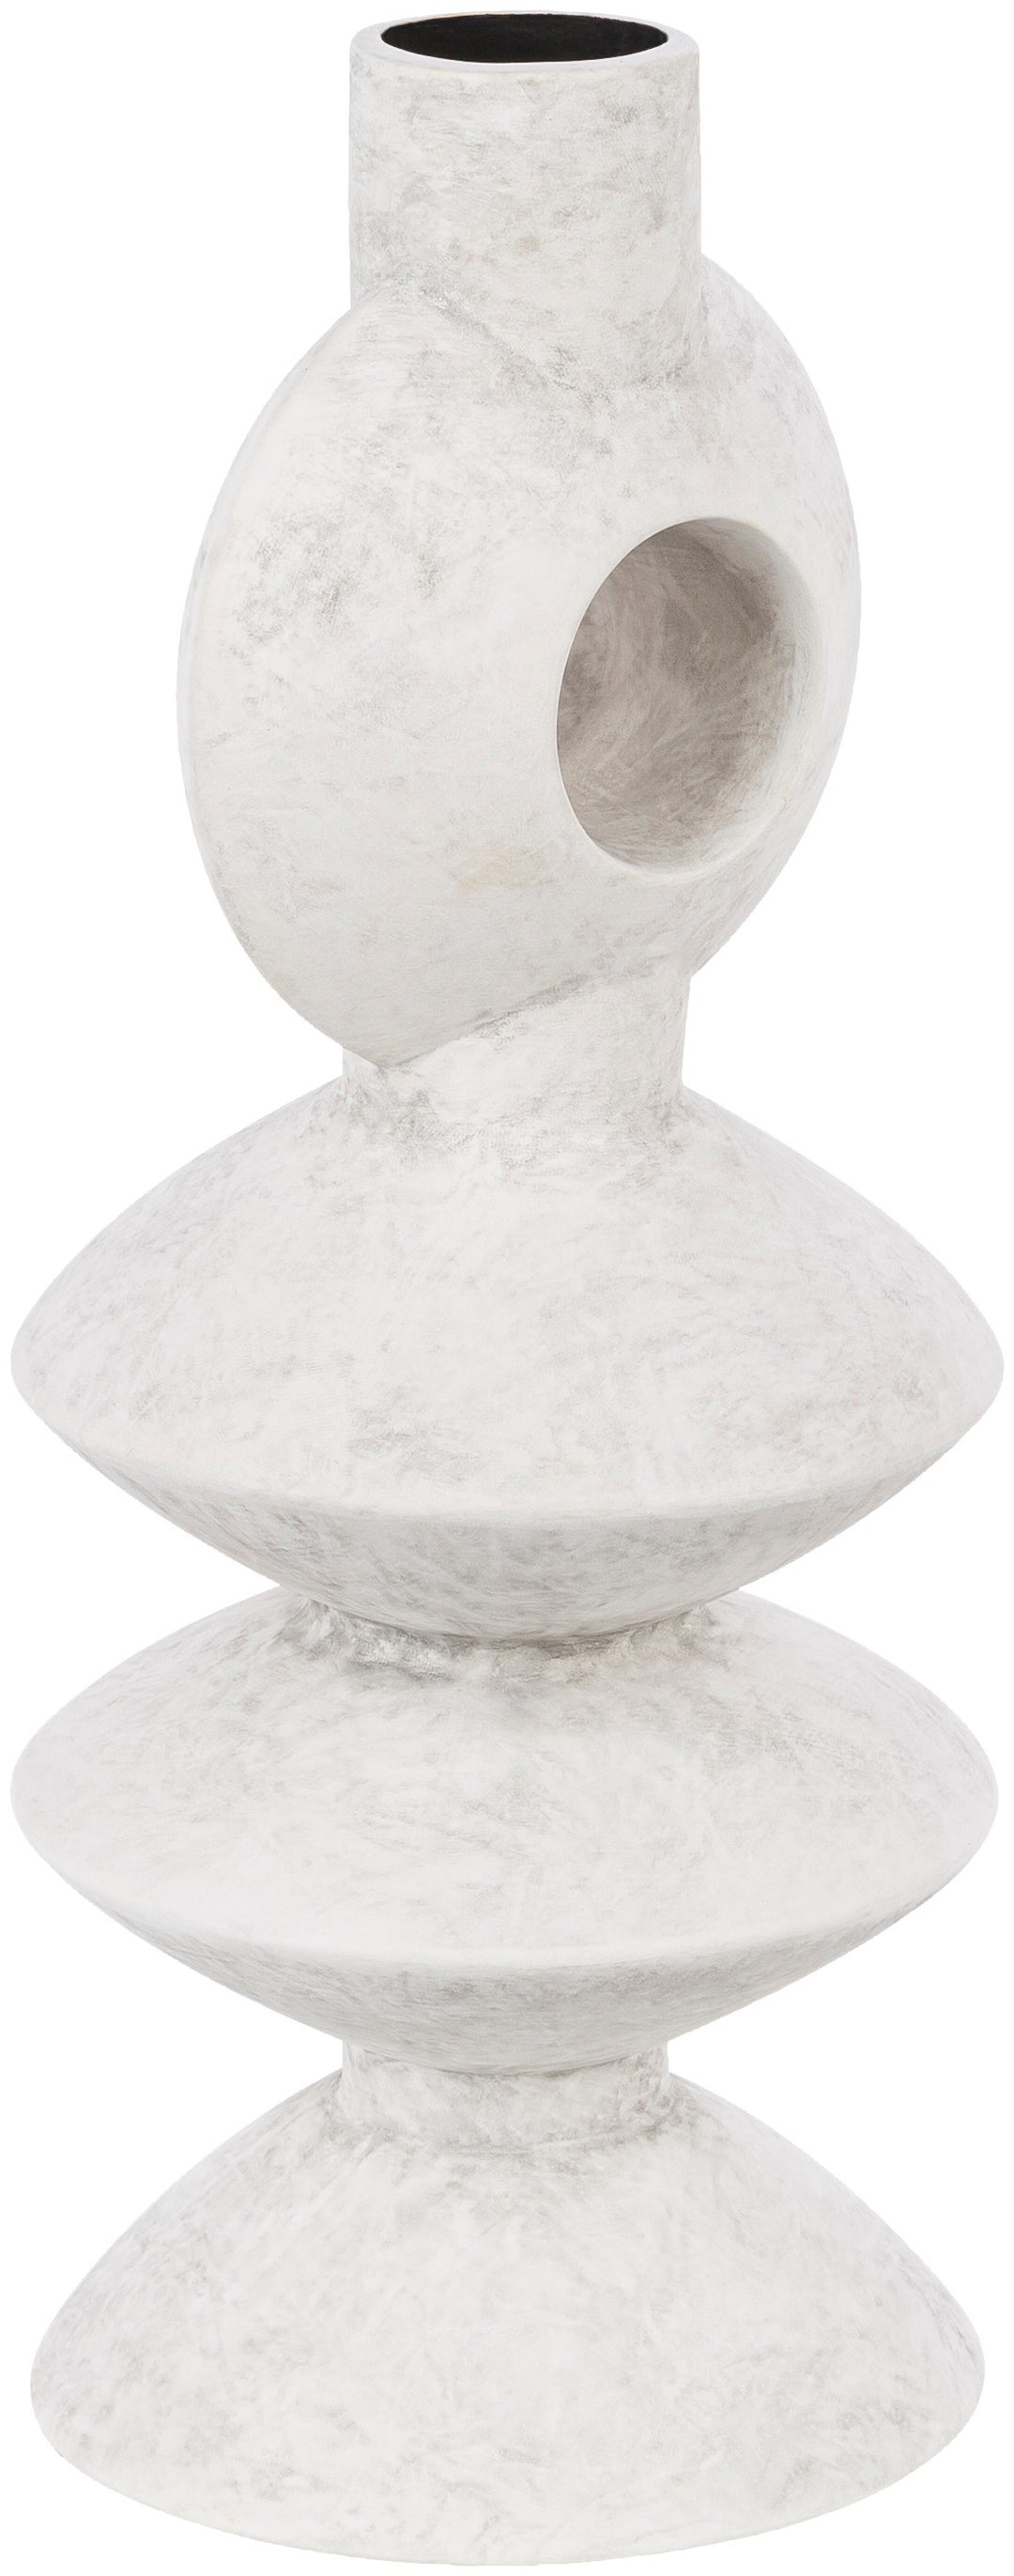 Reverie Pebble Decorative Ceramic Accent - White